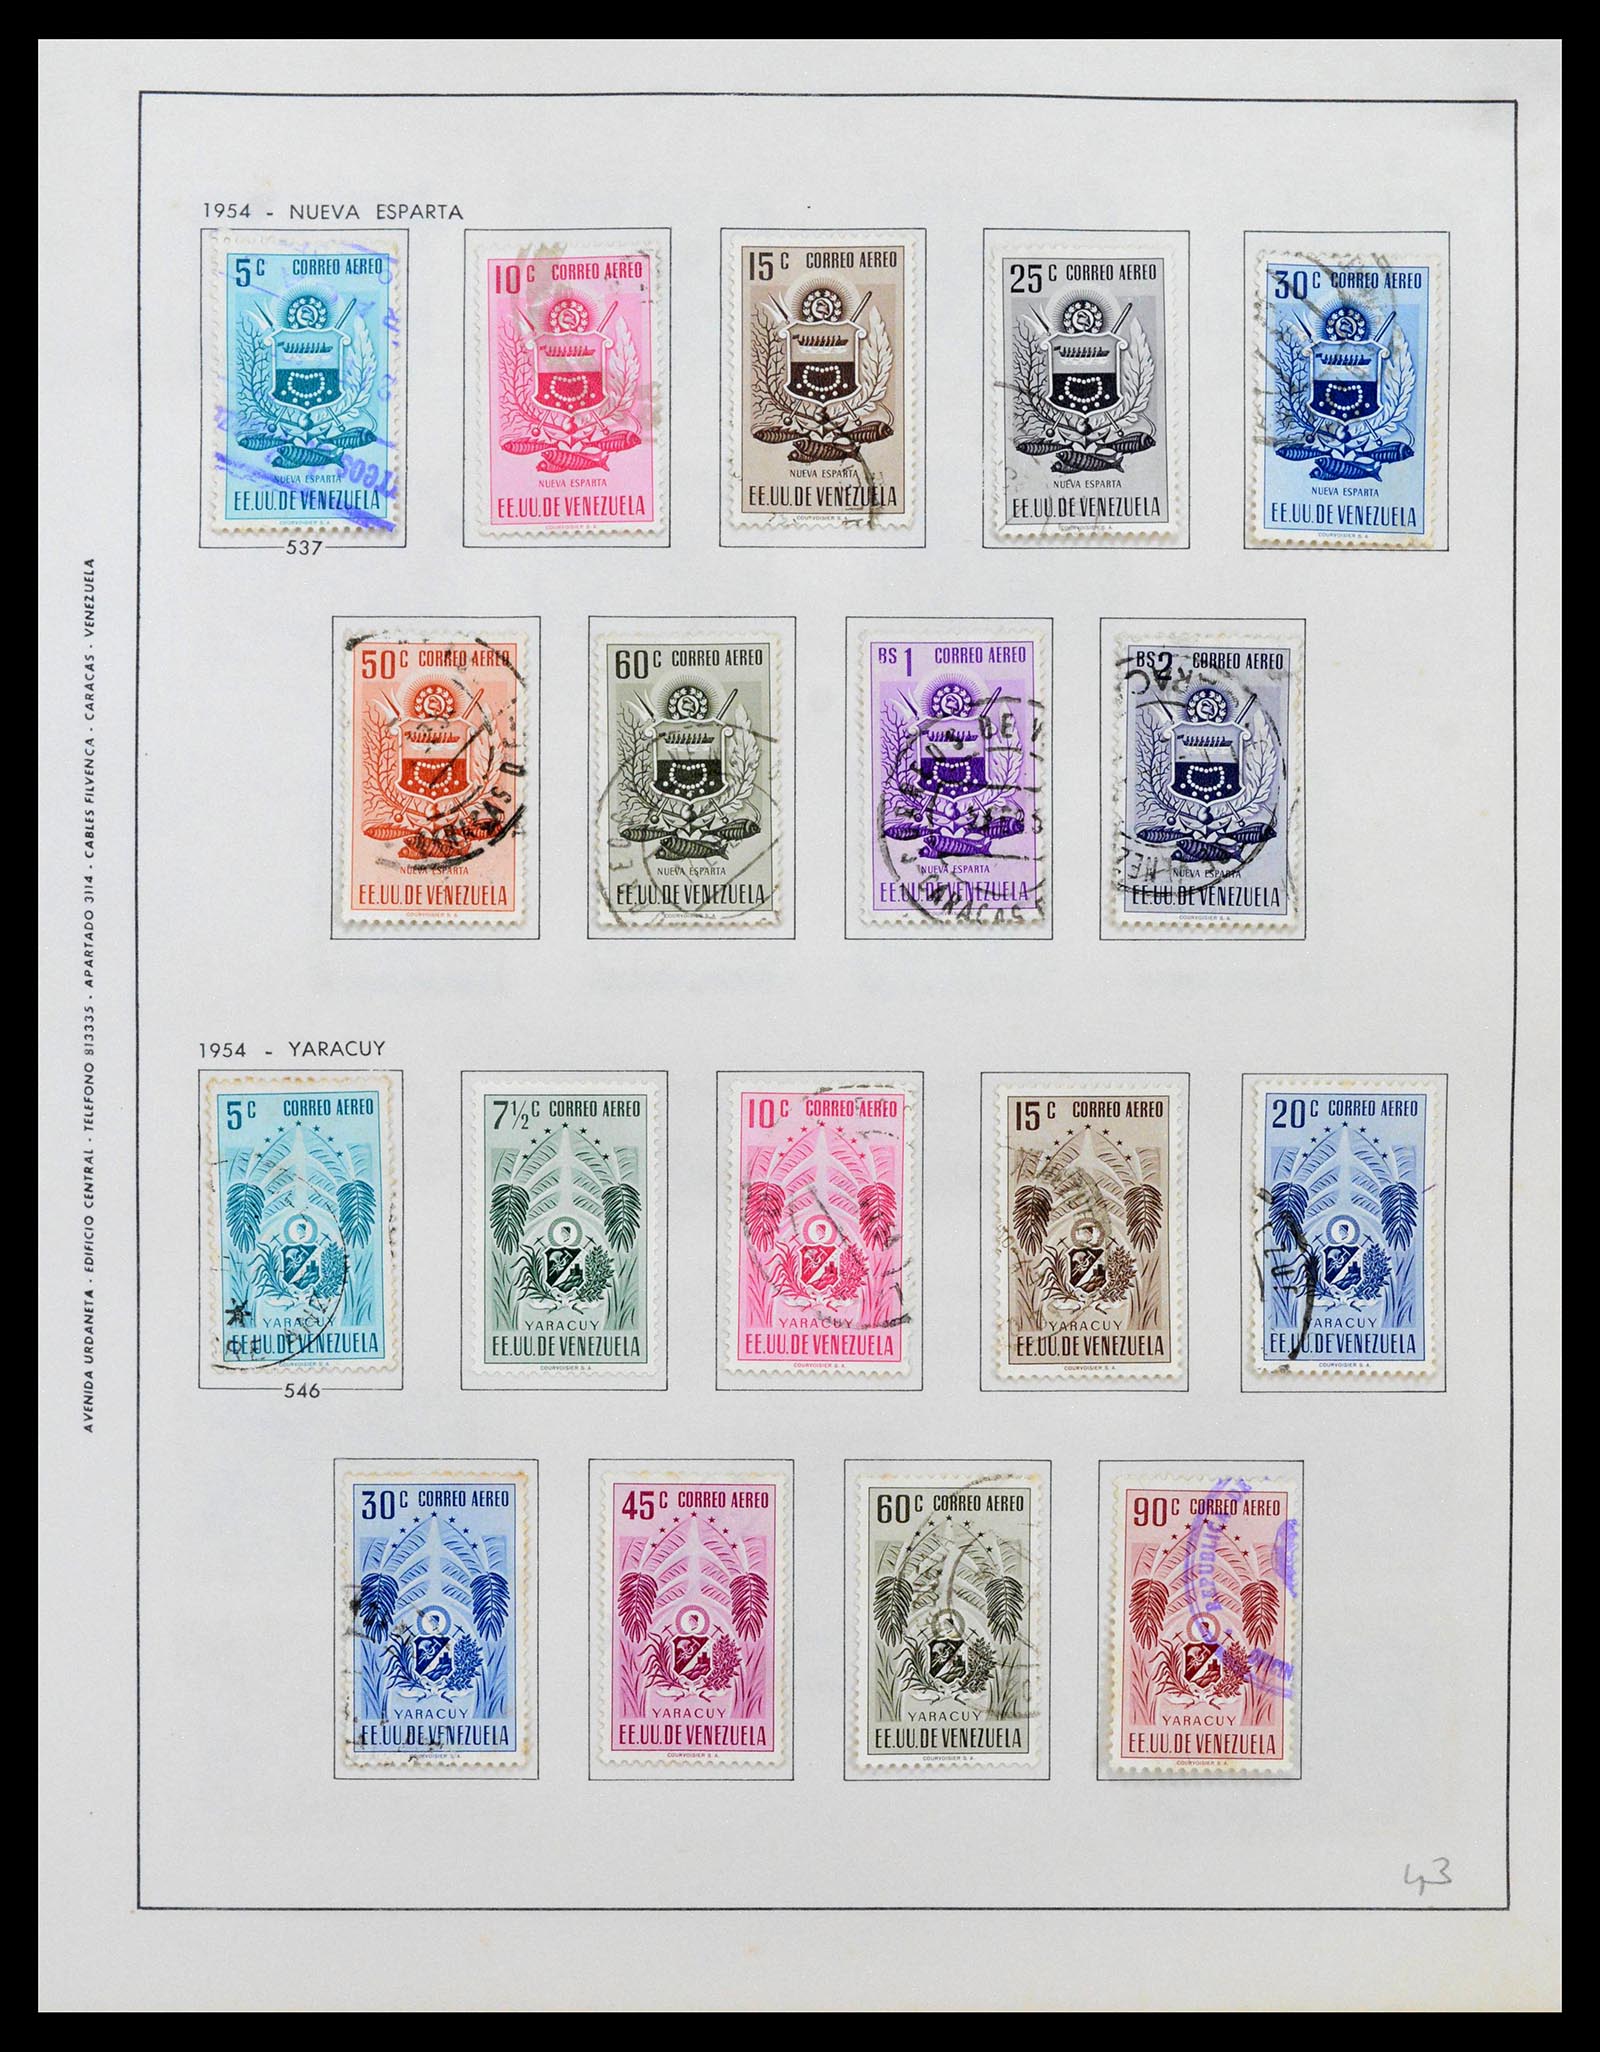 39436 0032 - Stamp collection 39436 Venezuela 1859-1985.